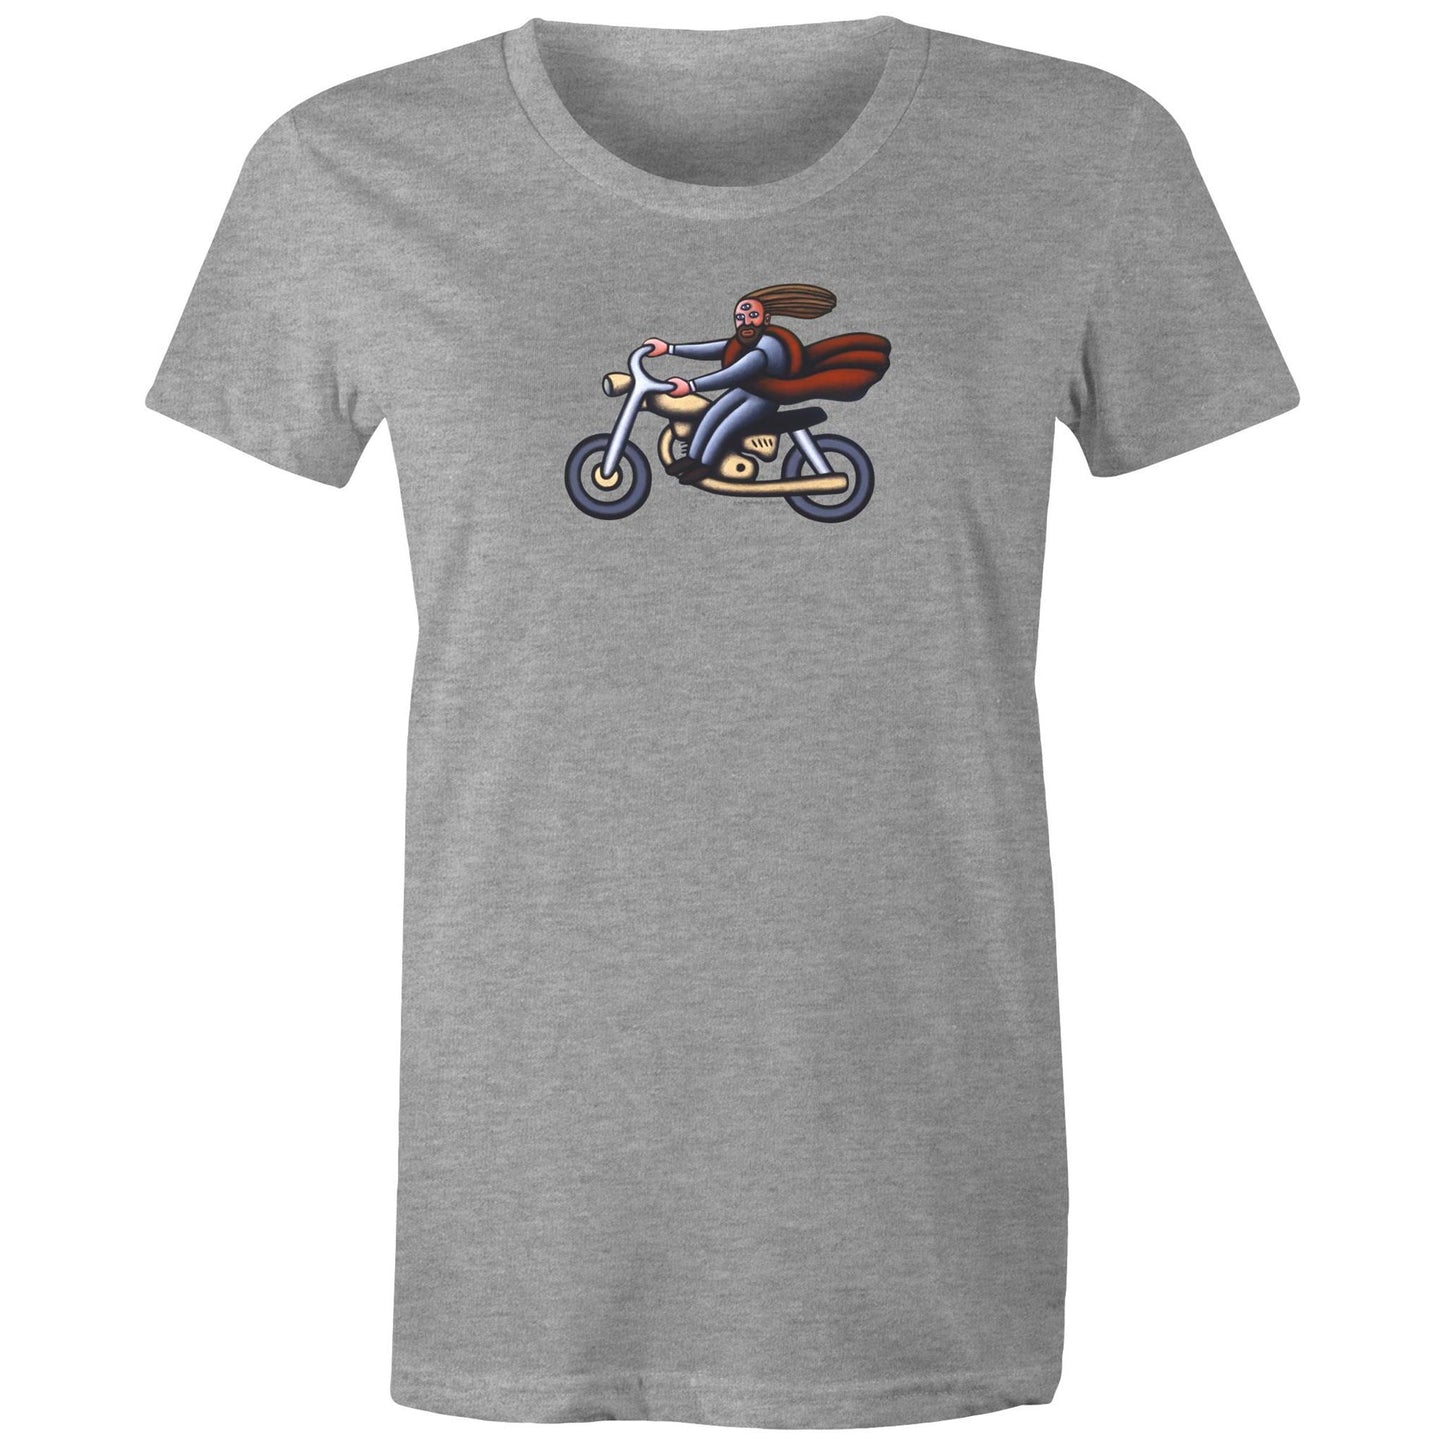 Australian Jesus on the Golden Motorbike T Shirts for Women